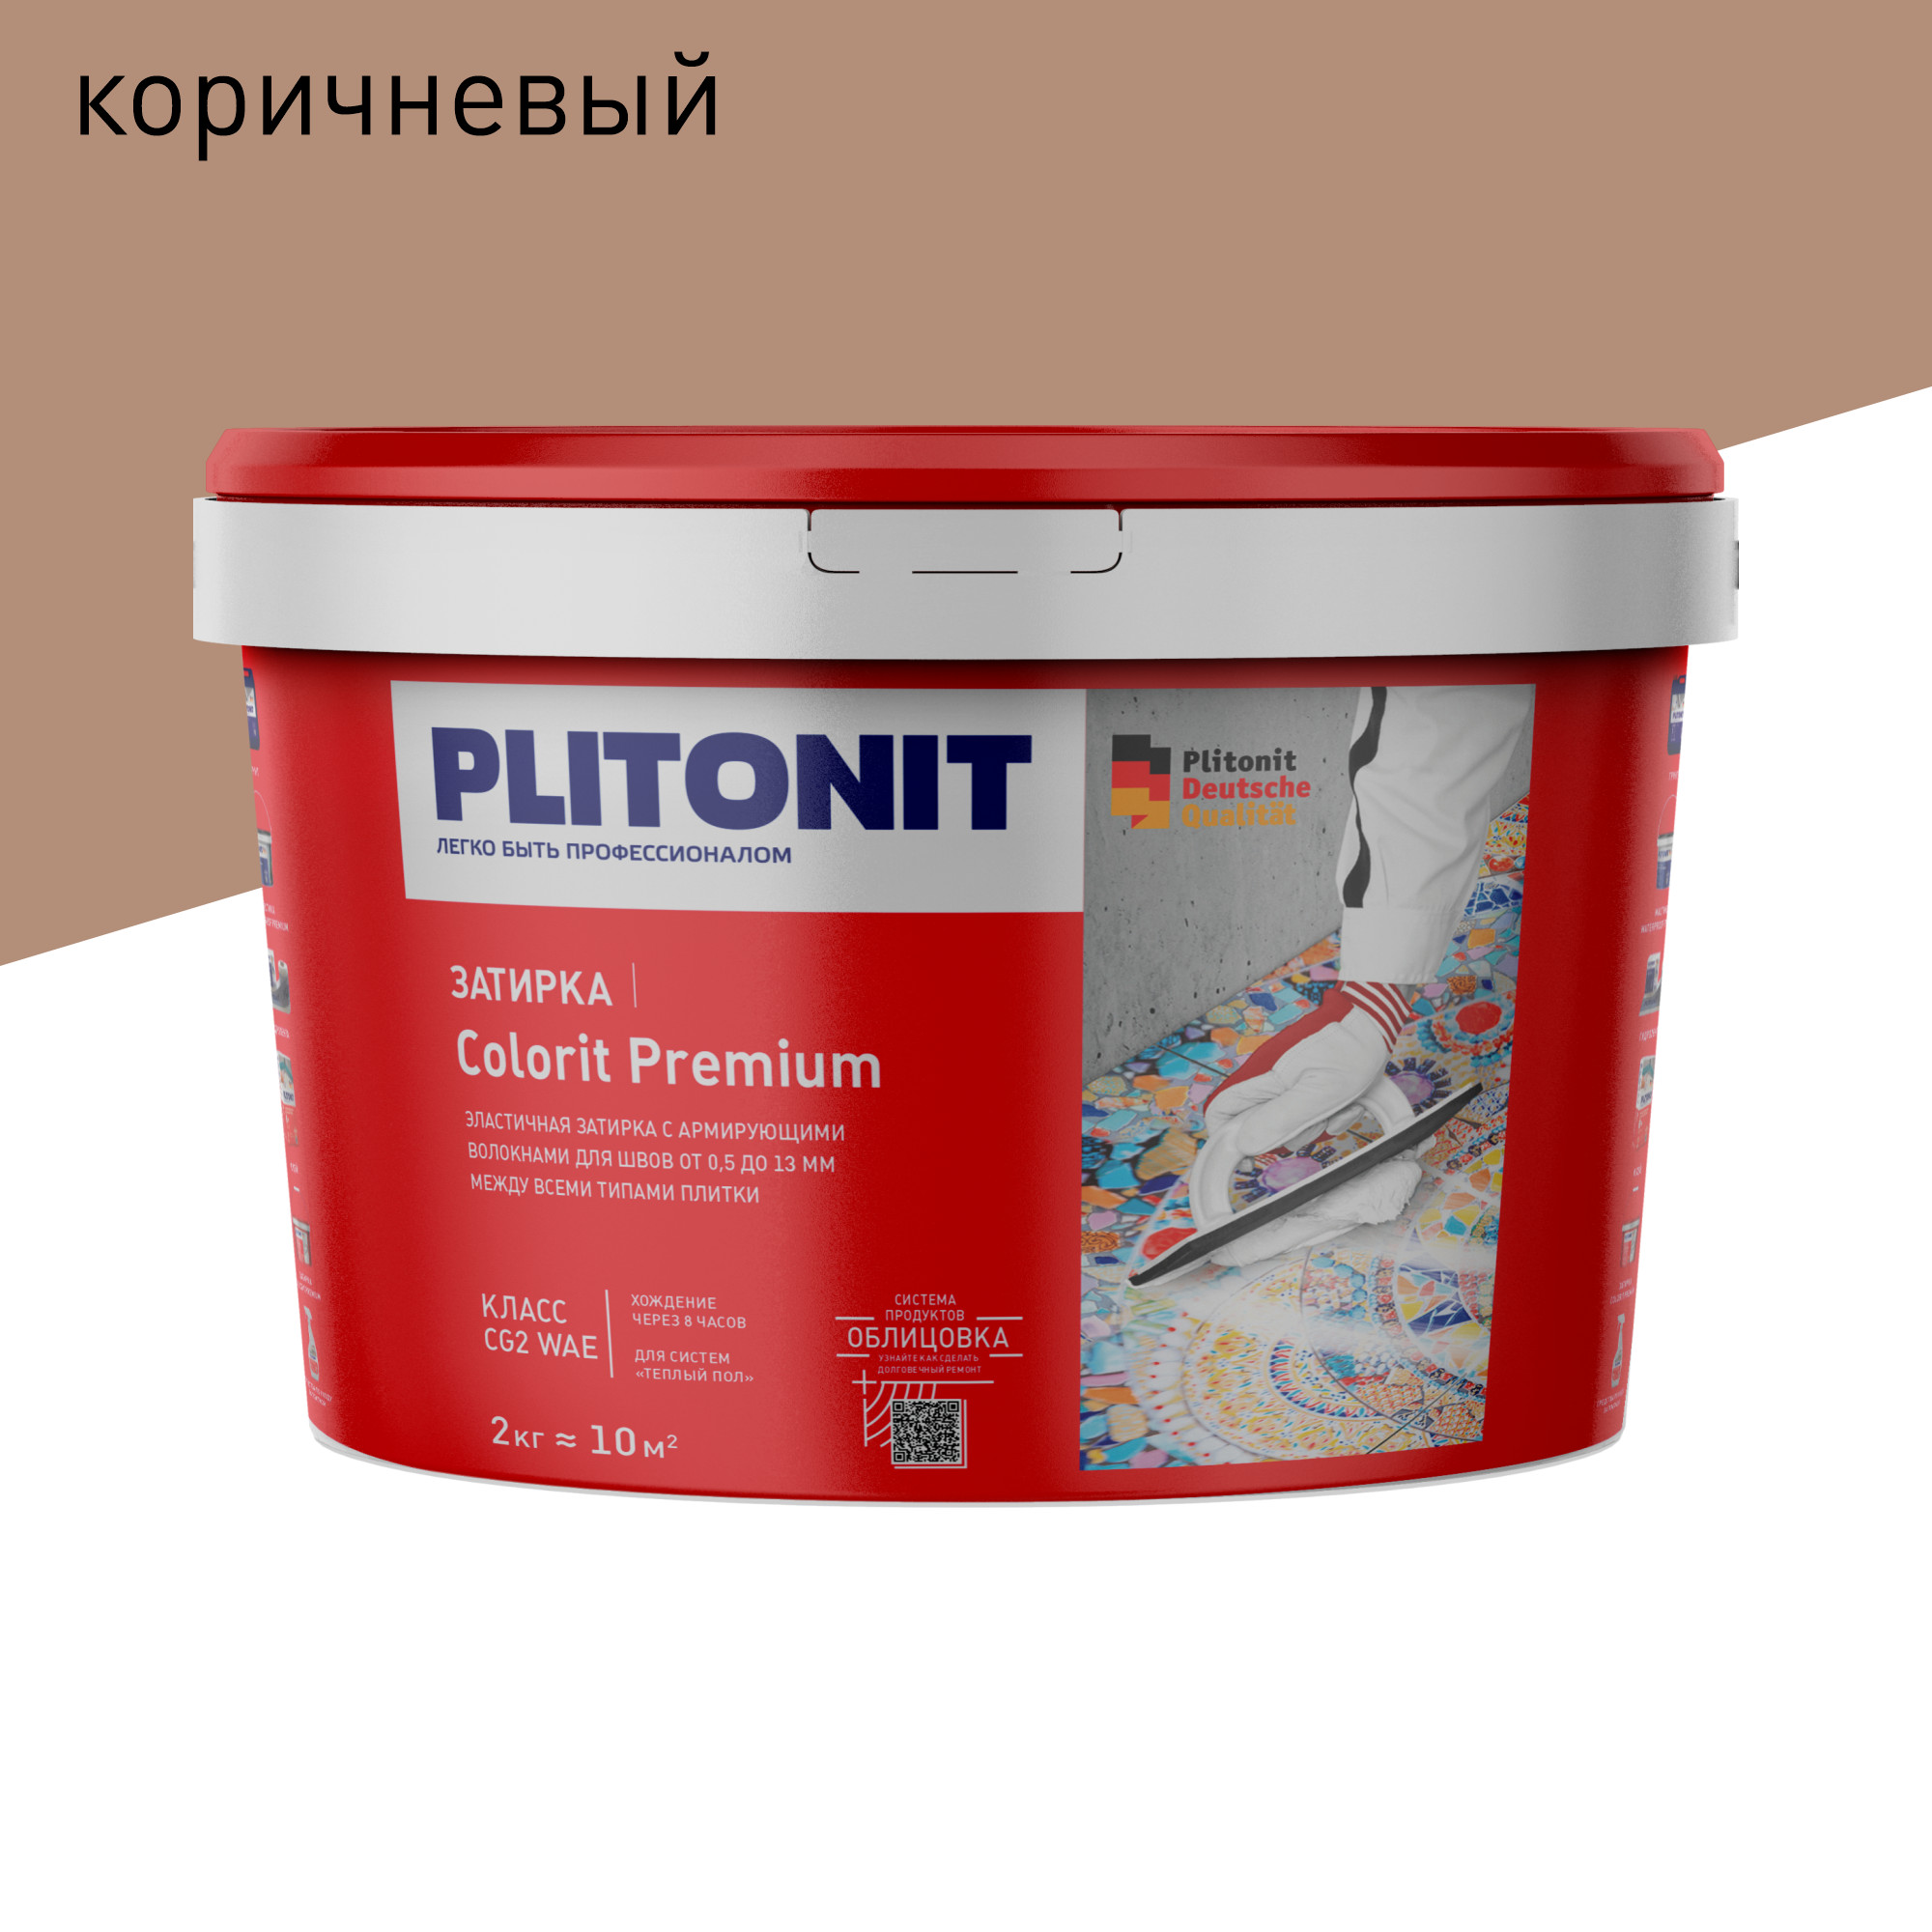 Затирка PLITONIT Colorit Premium коричневая 2 кг затирка plitonit colorit premium светло серая 2 кг